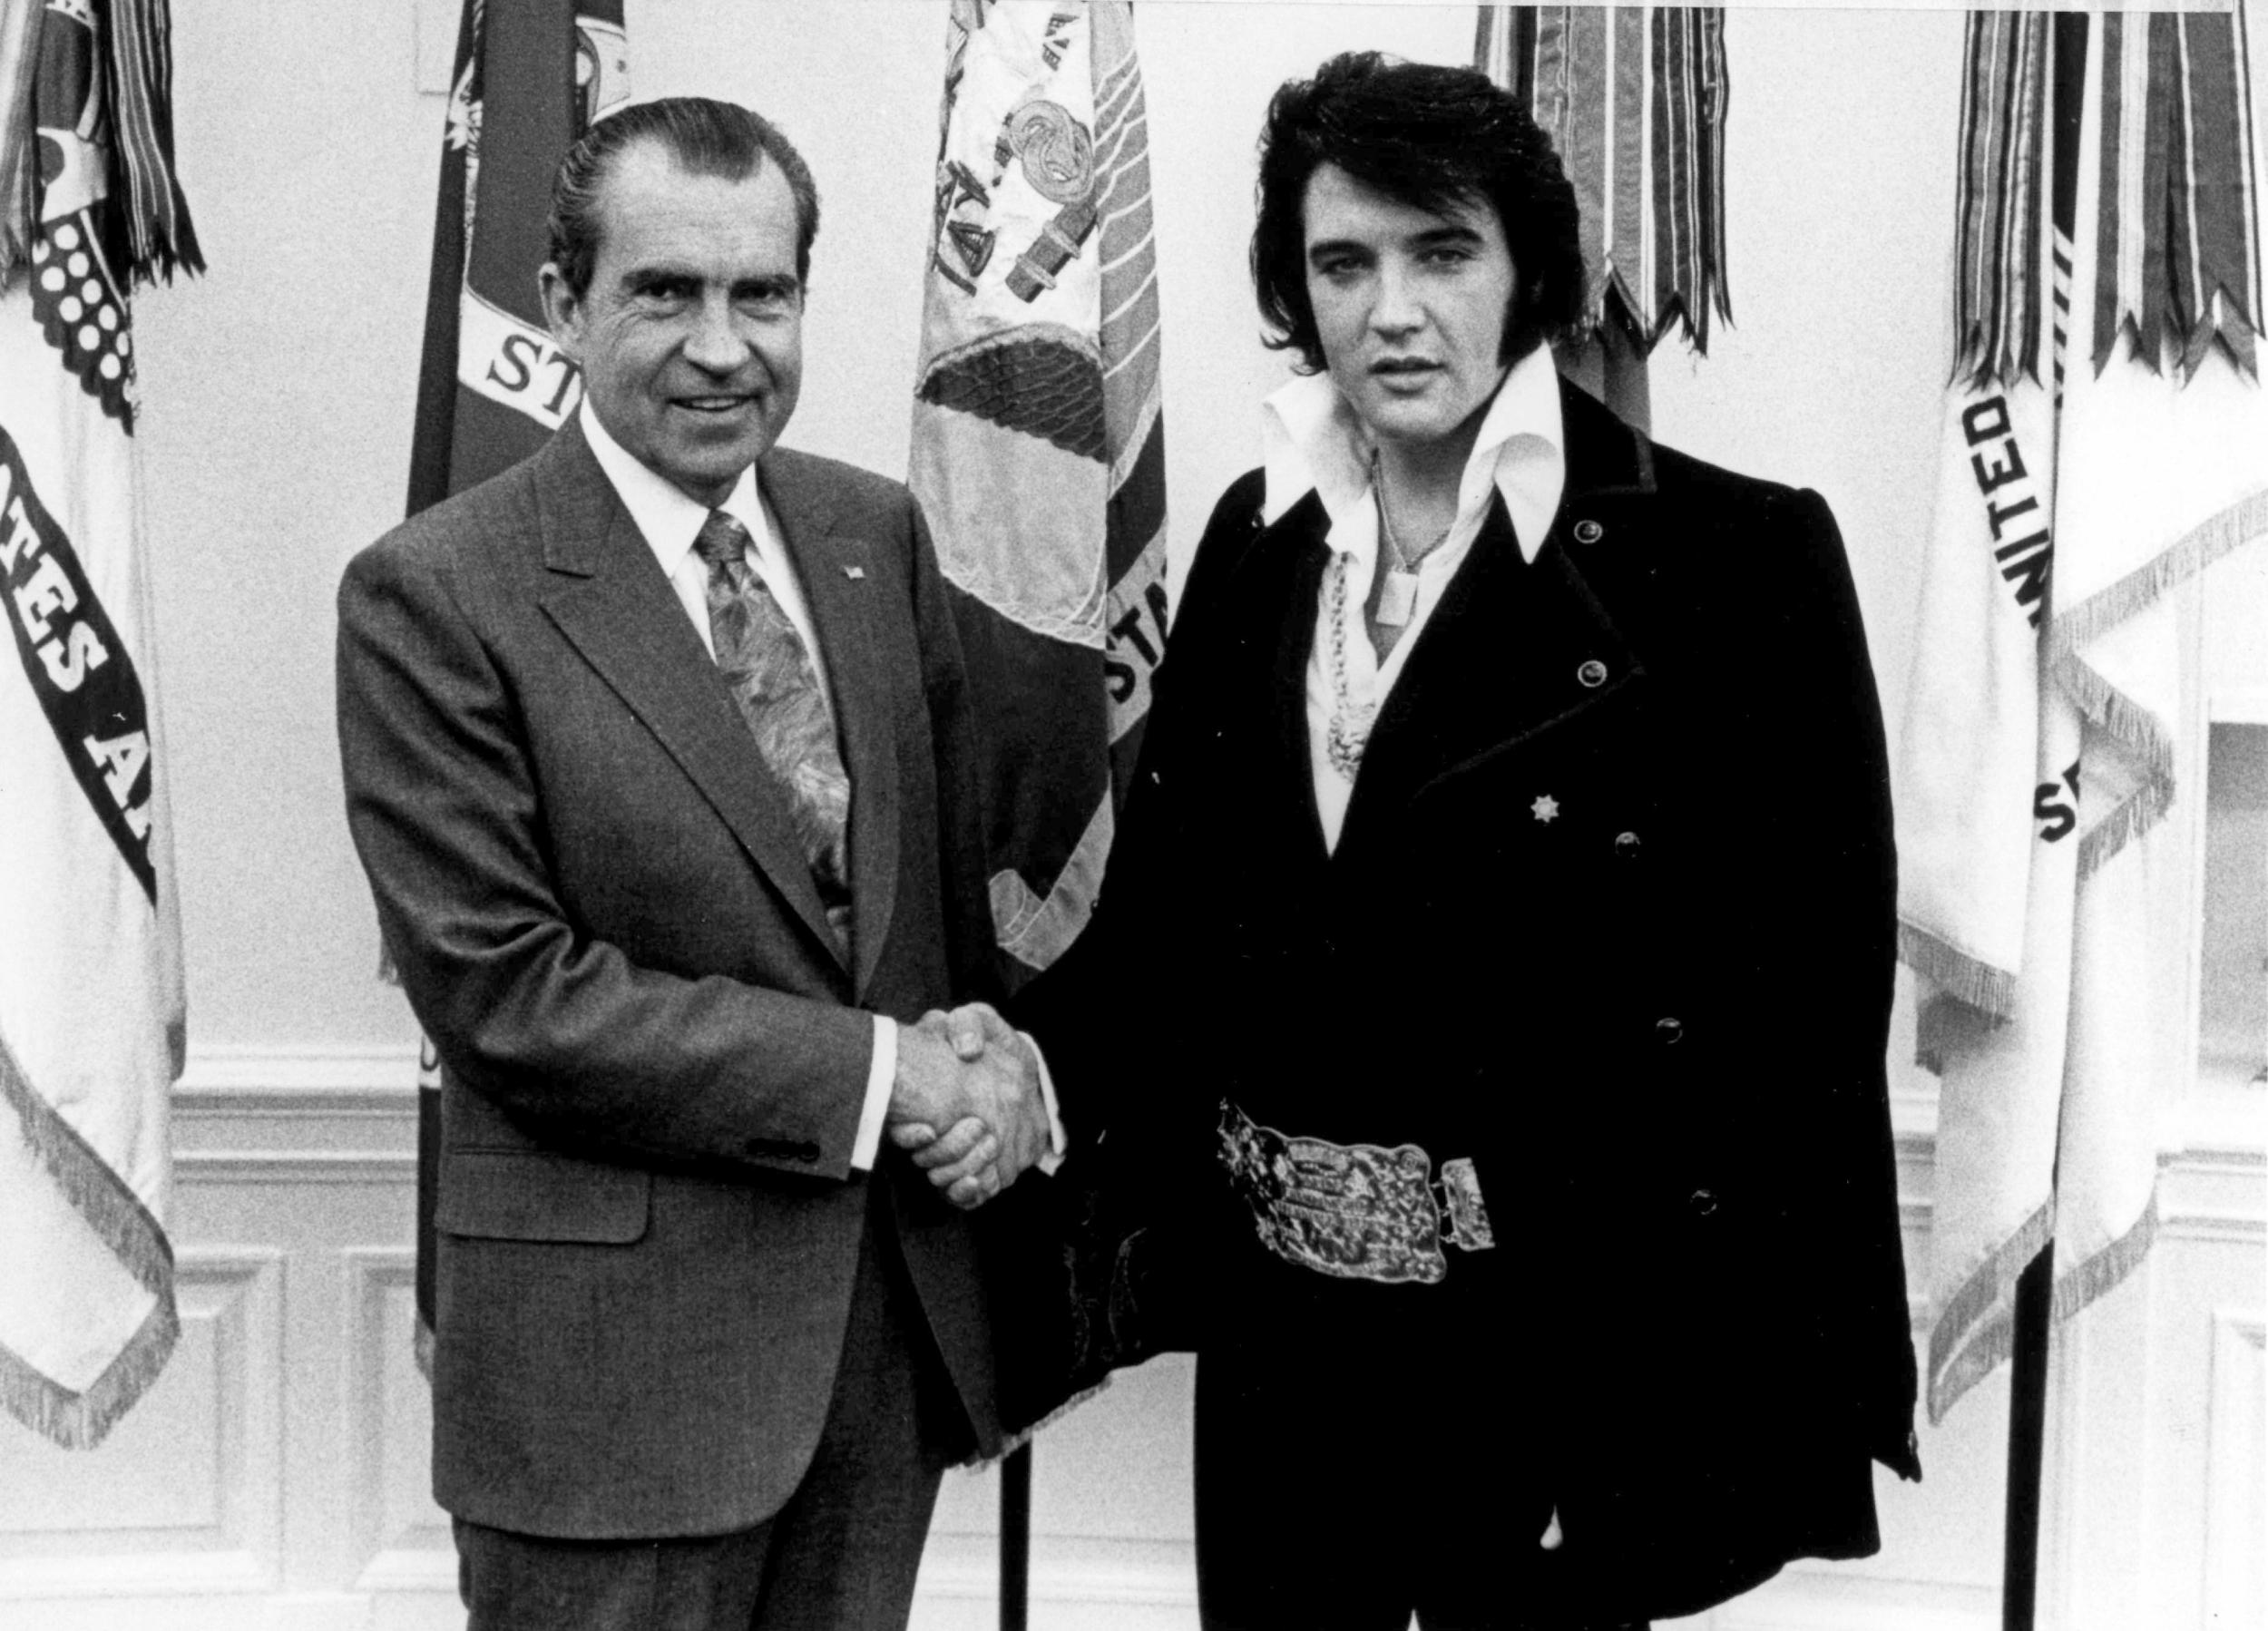 Elvis Presley meets Richard Nixon in December 1970